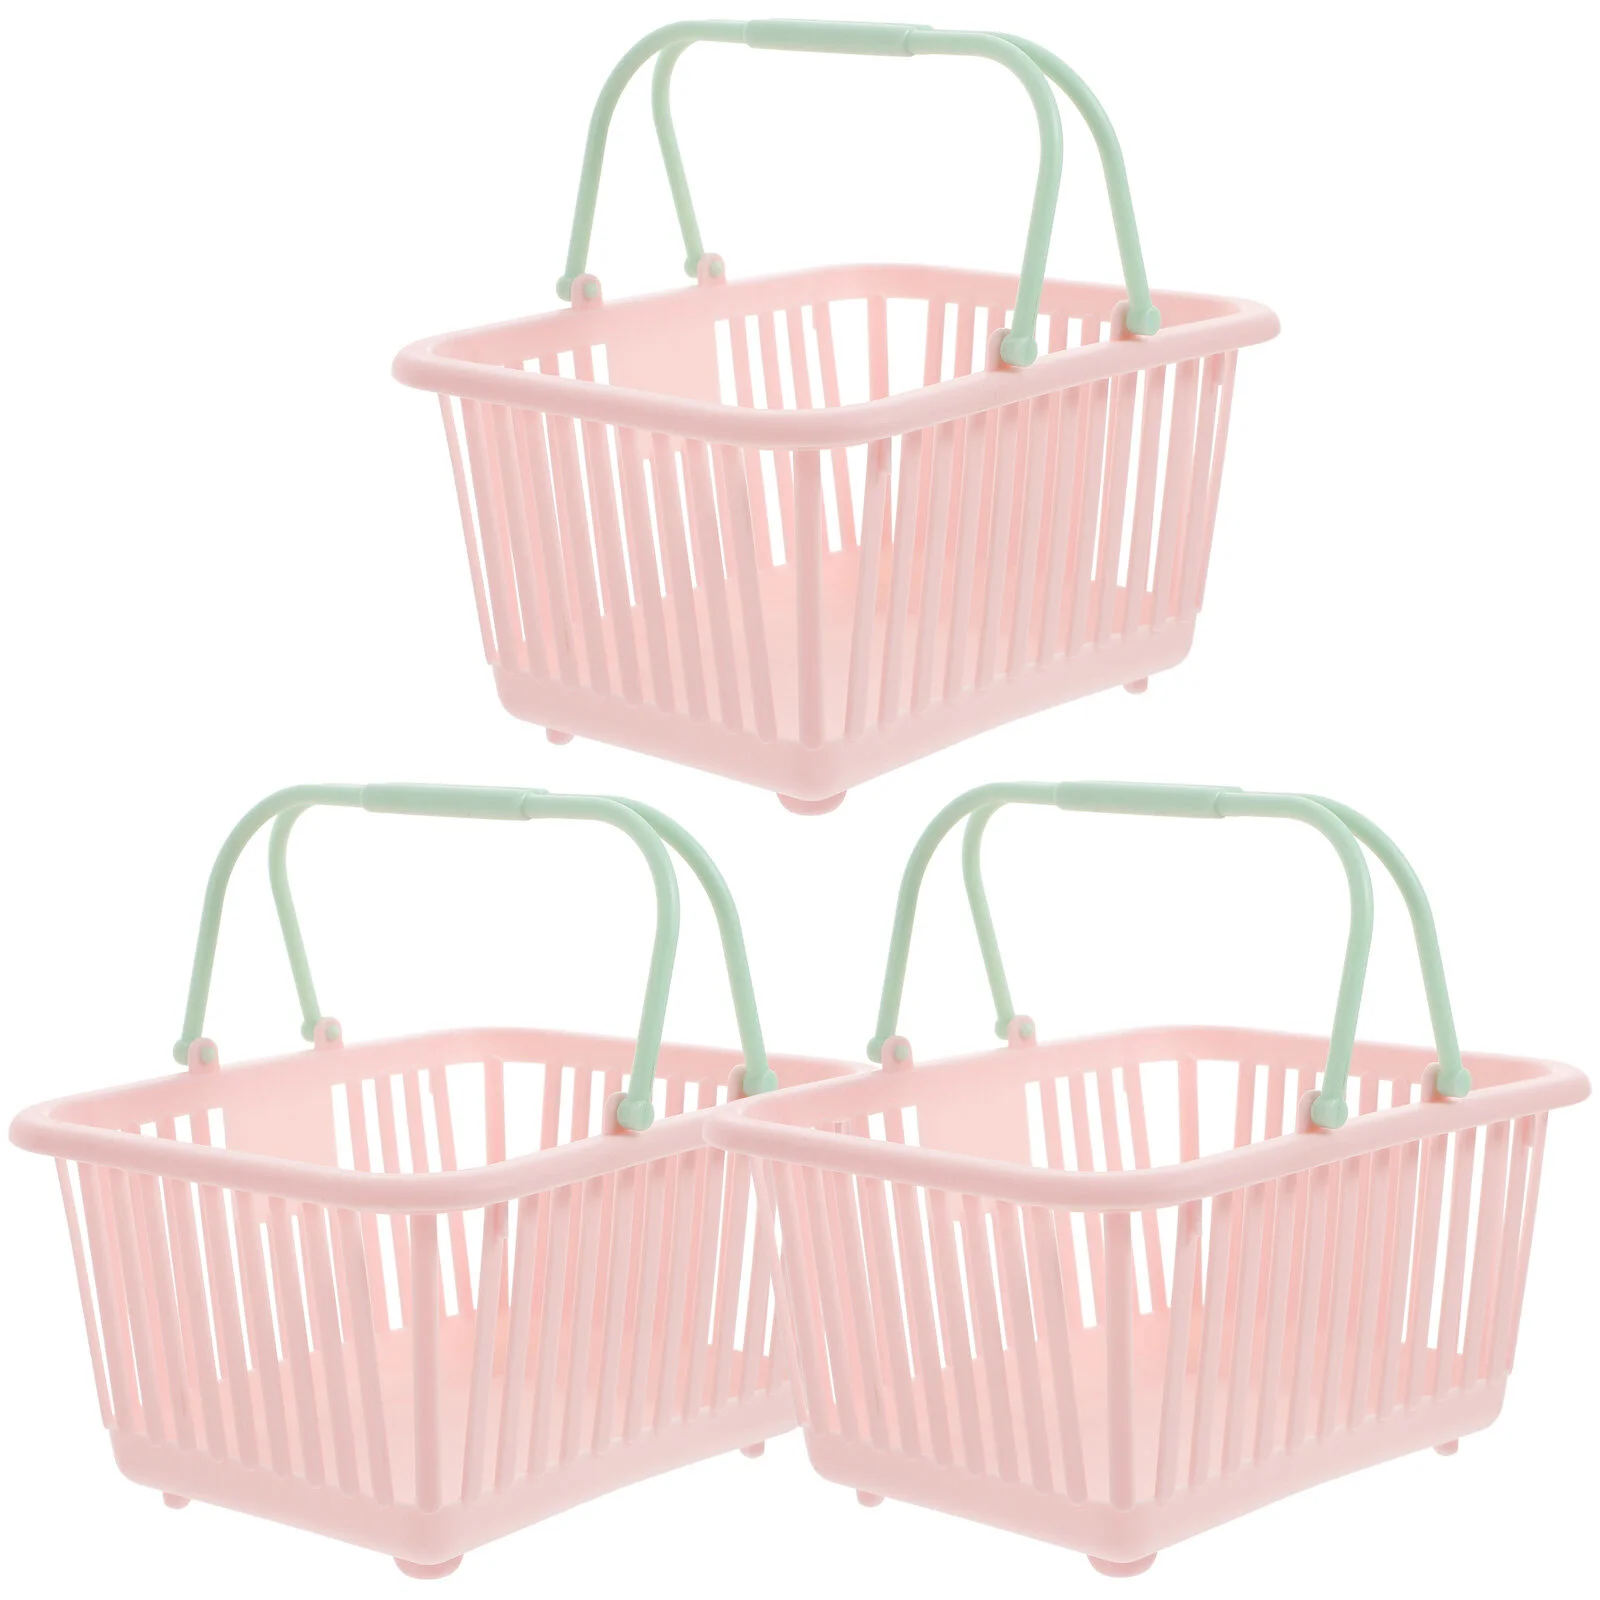 

3 Pcs Reward Toy Buckets Kids Storage Garden Basket Plastic Coat Hangers Baskets Classroom Shopping cart